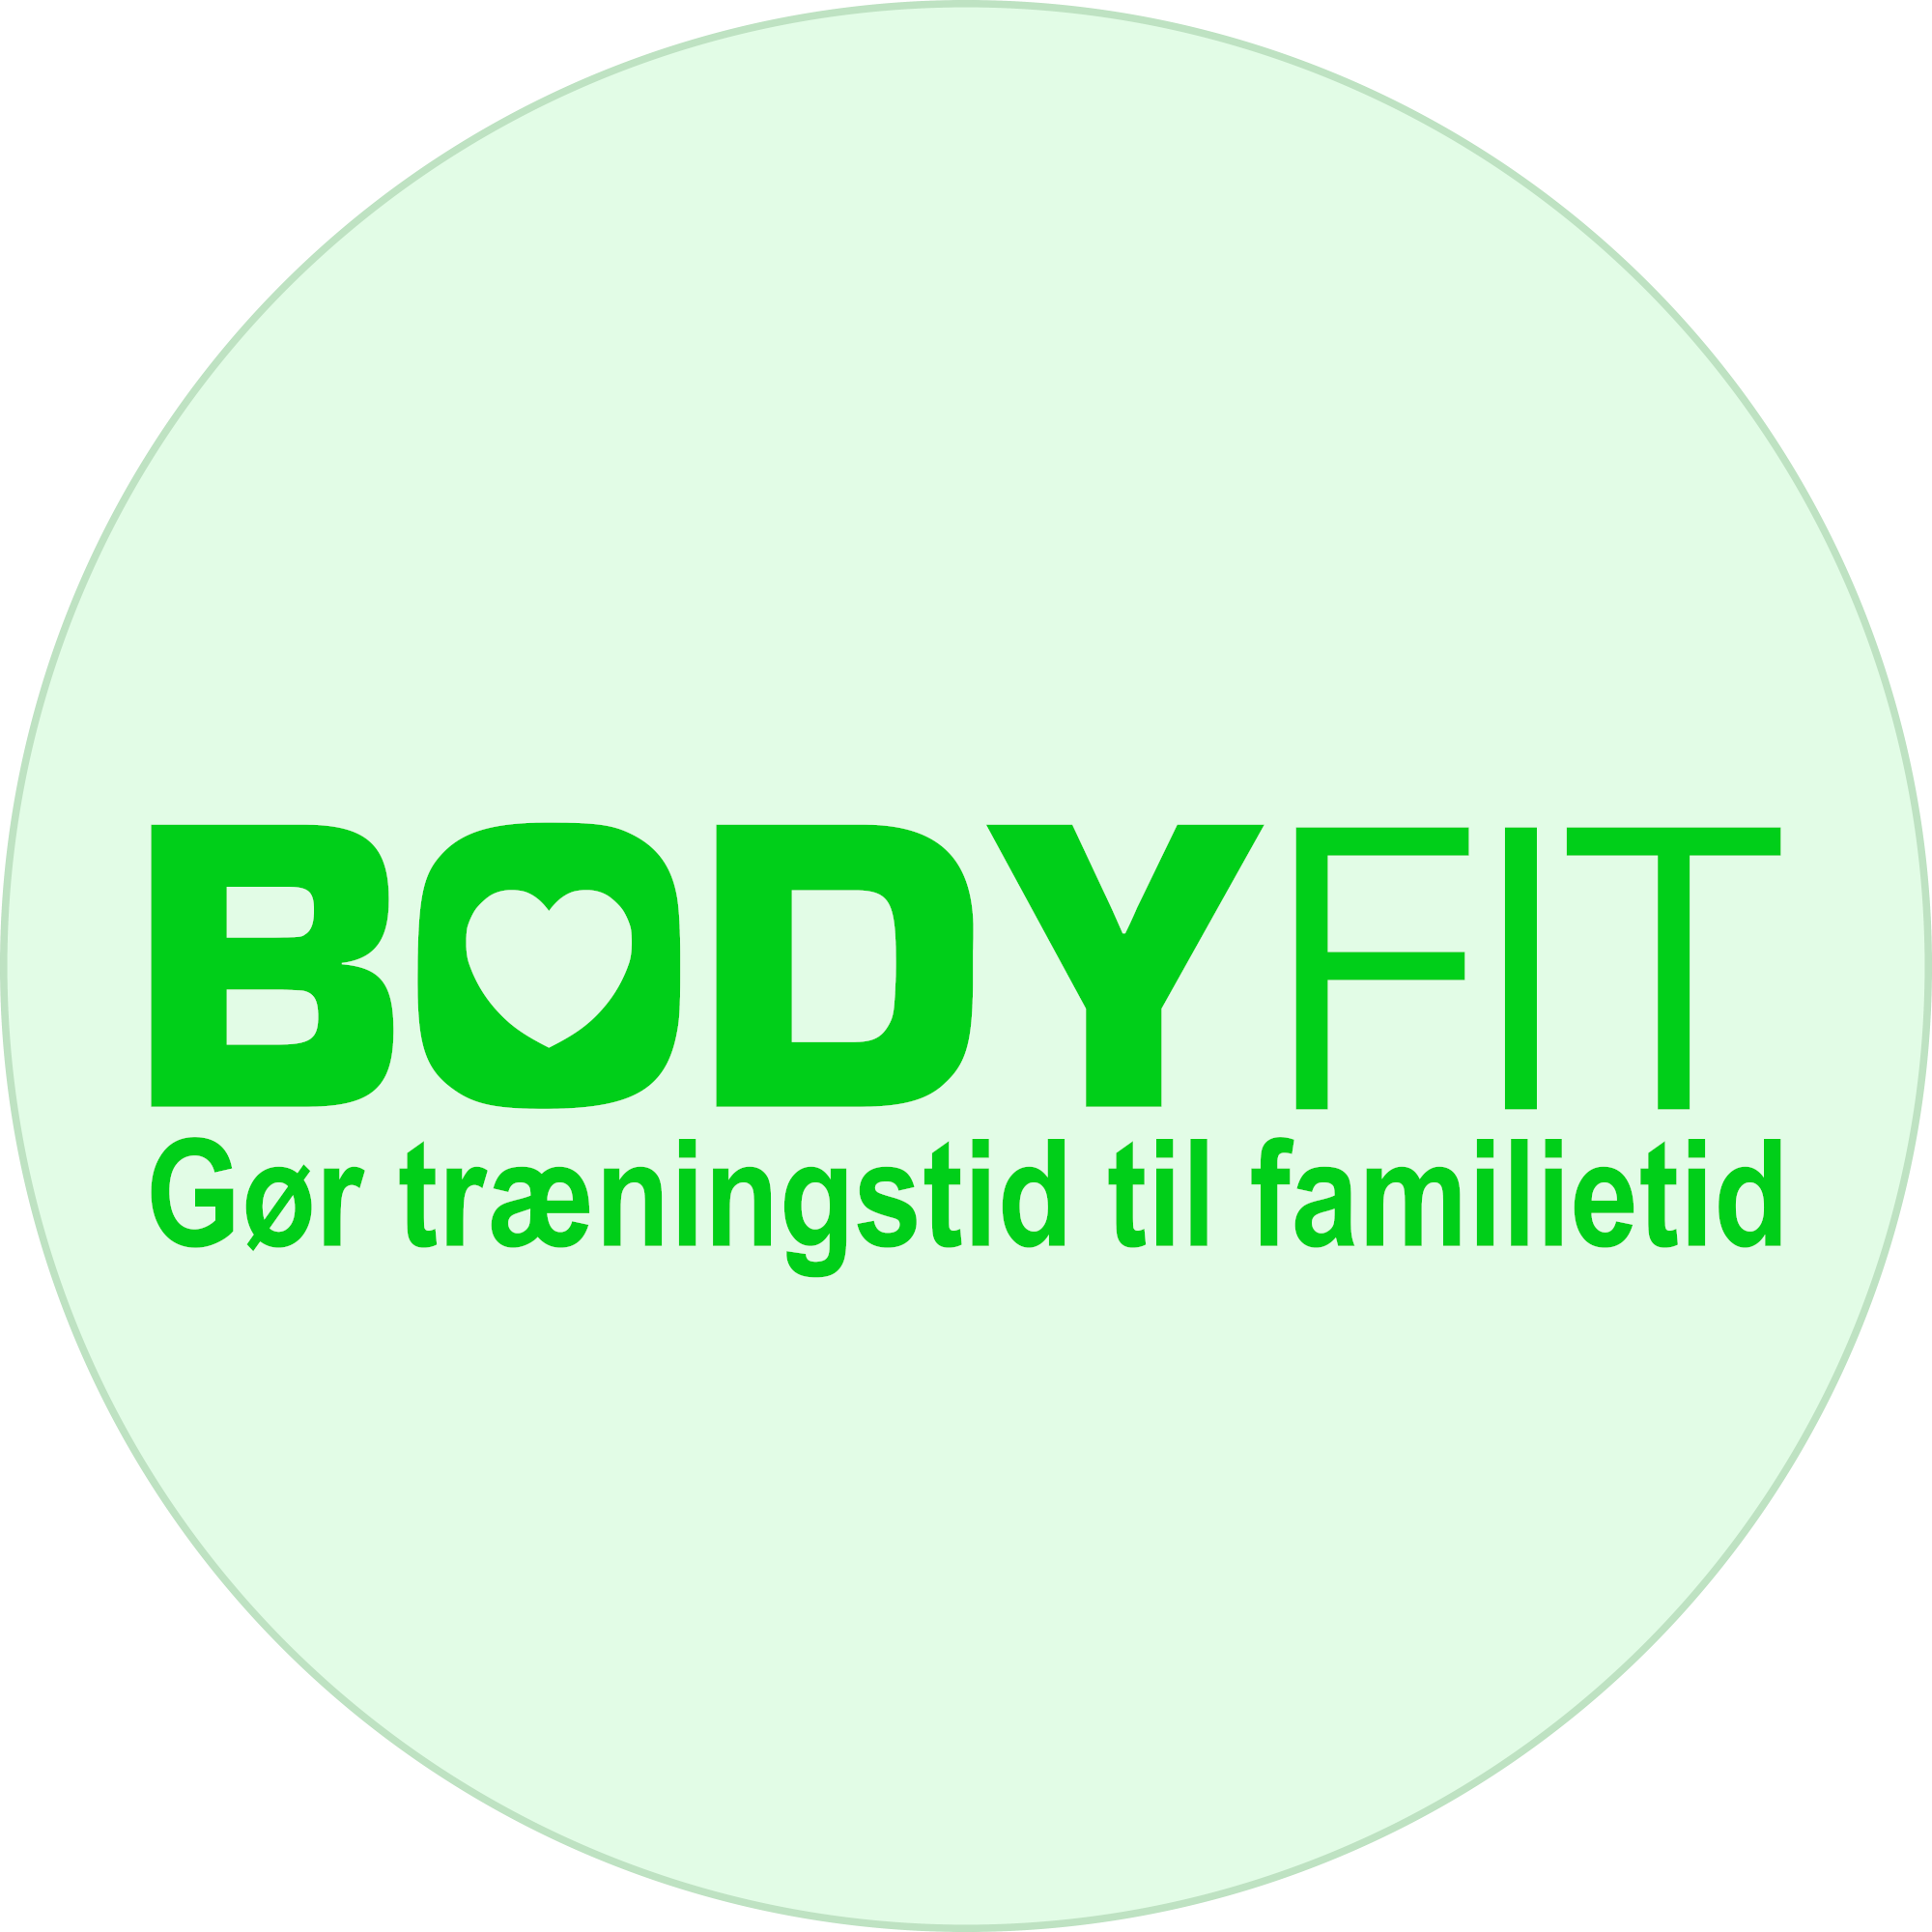 bodyfit_logo_grøn_cirkel_tekst_kant_2000